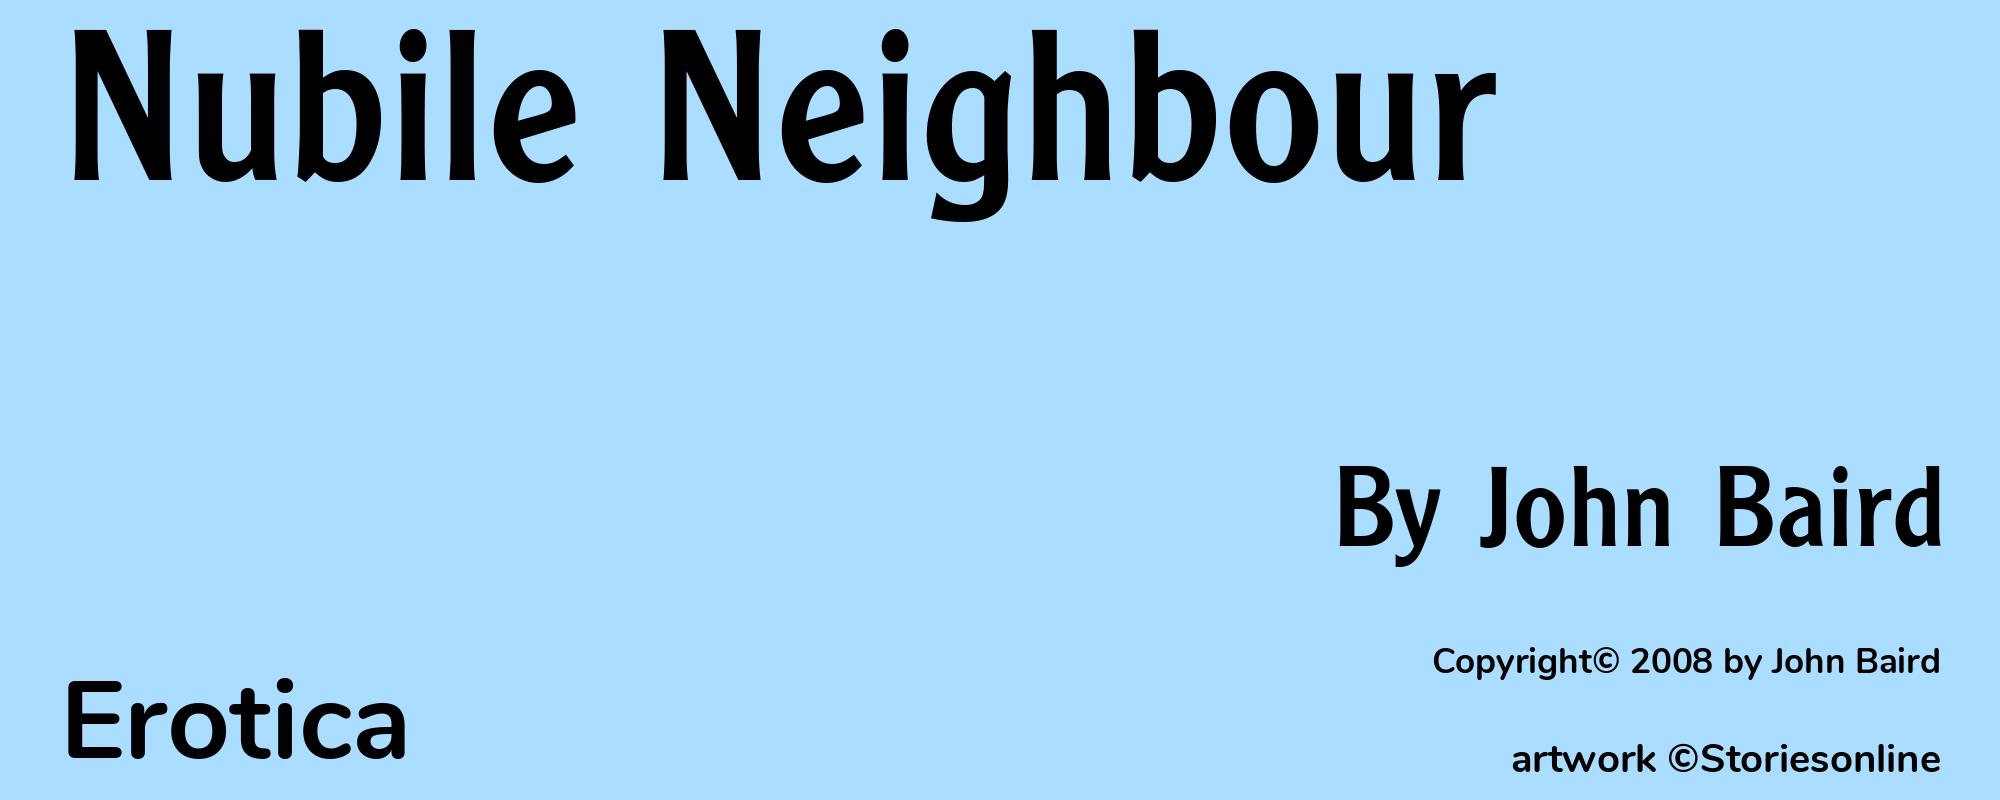 Nubile Neighbour - Cover